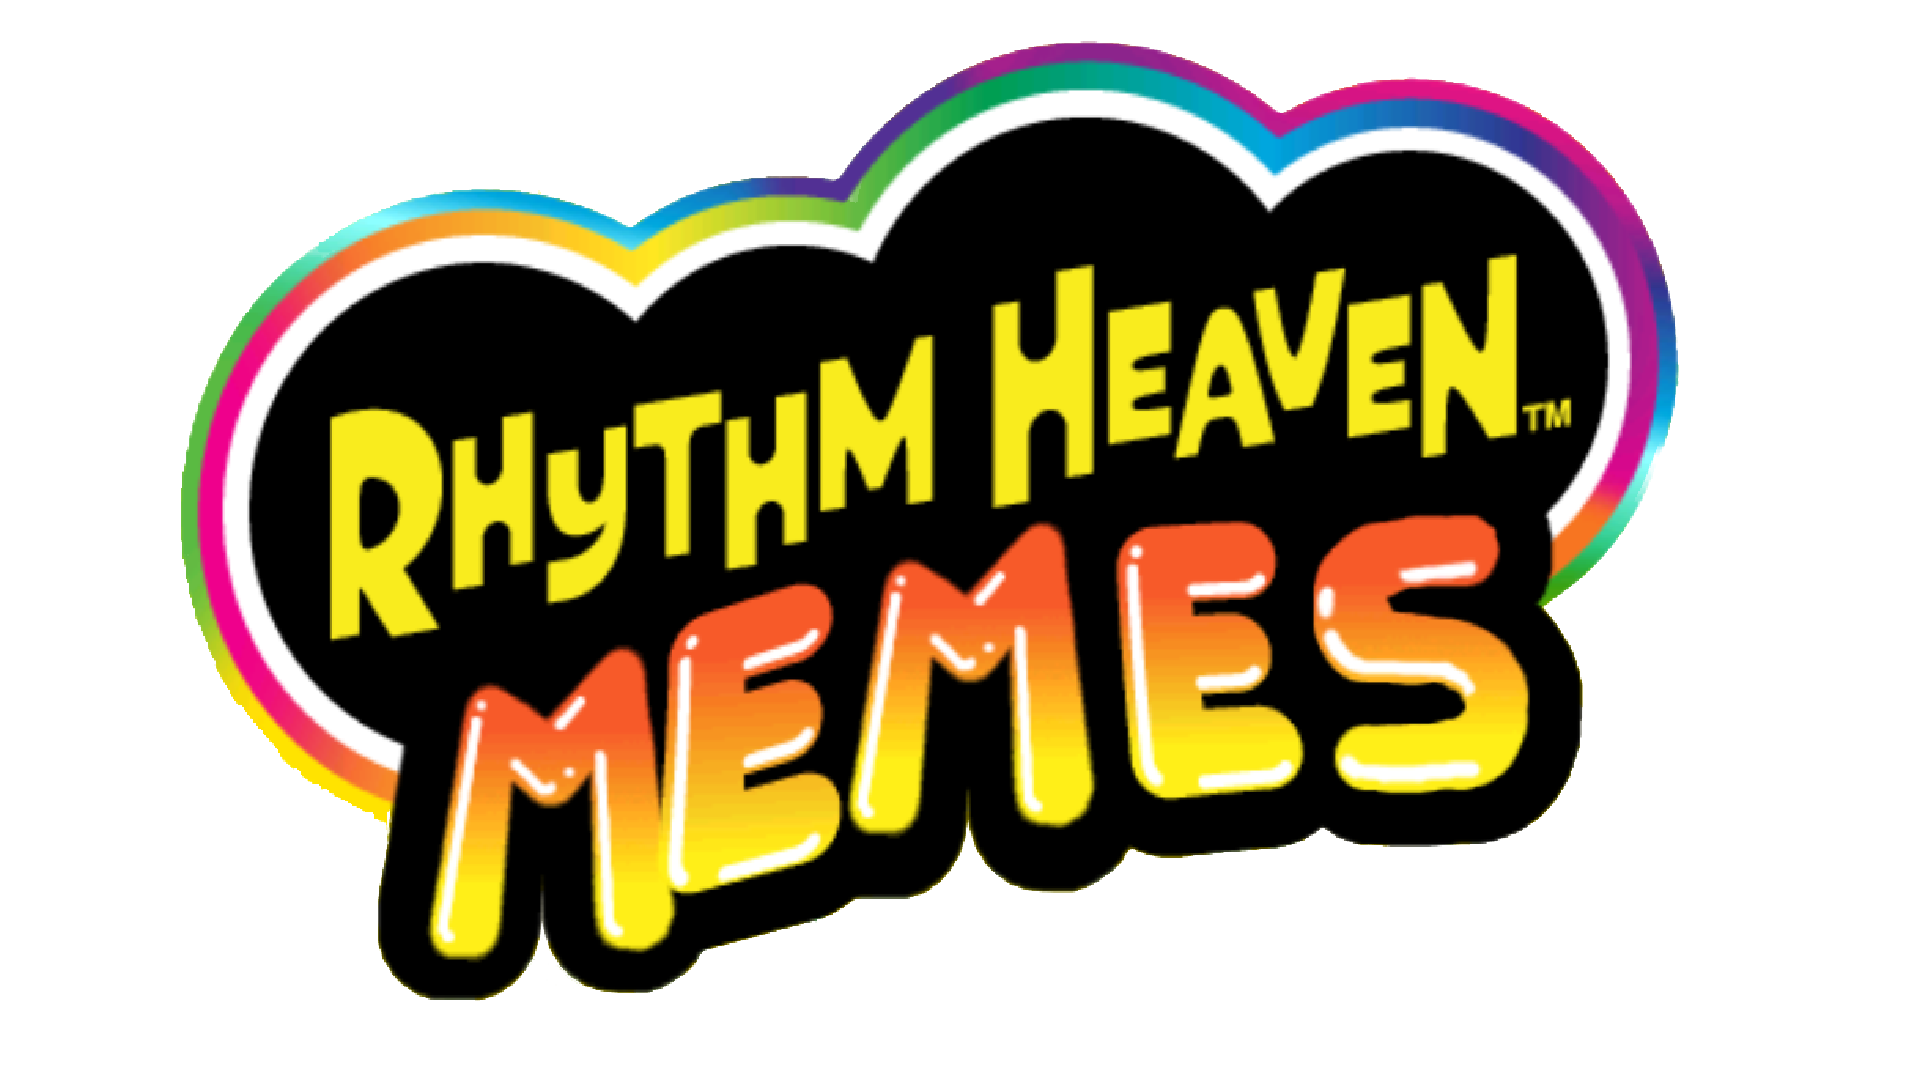 Rhythm Heaven Fever Repainted Logo